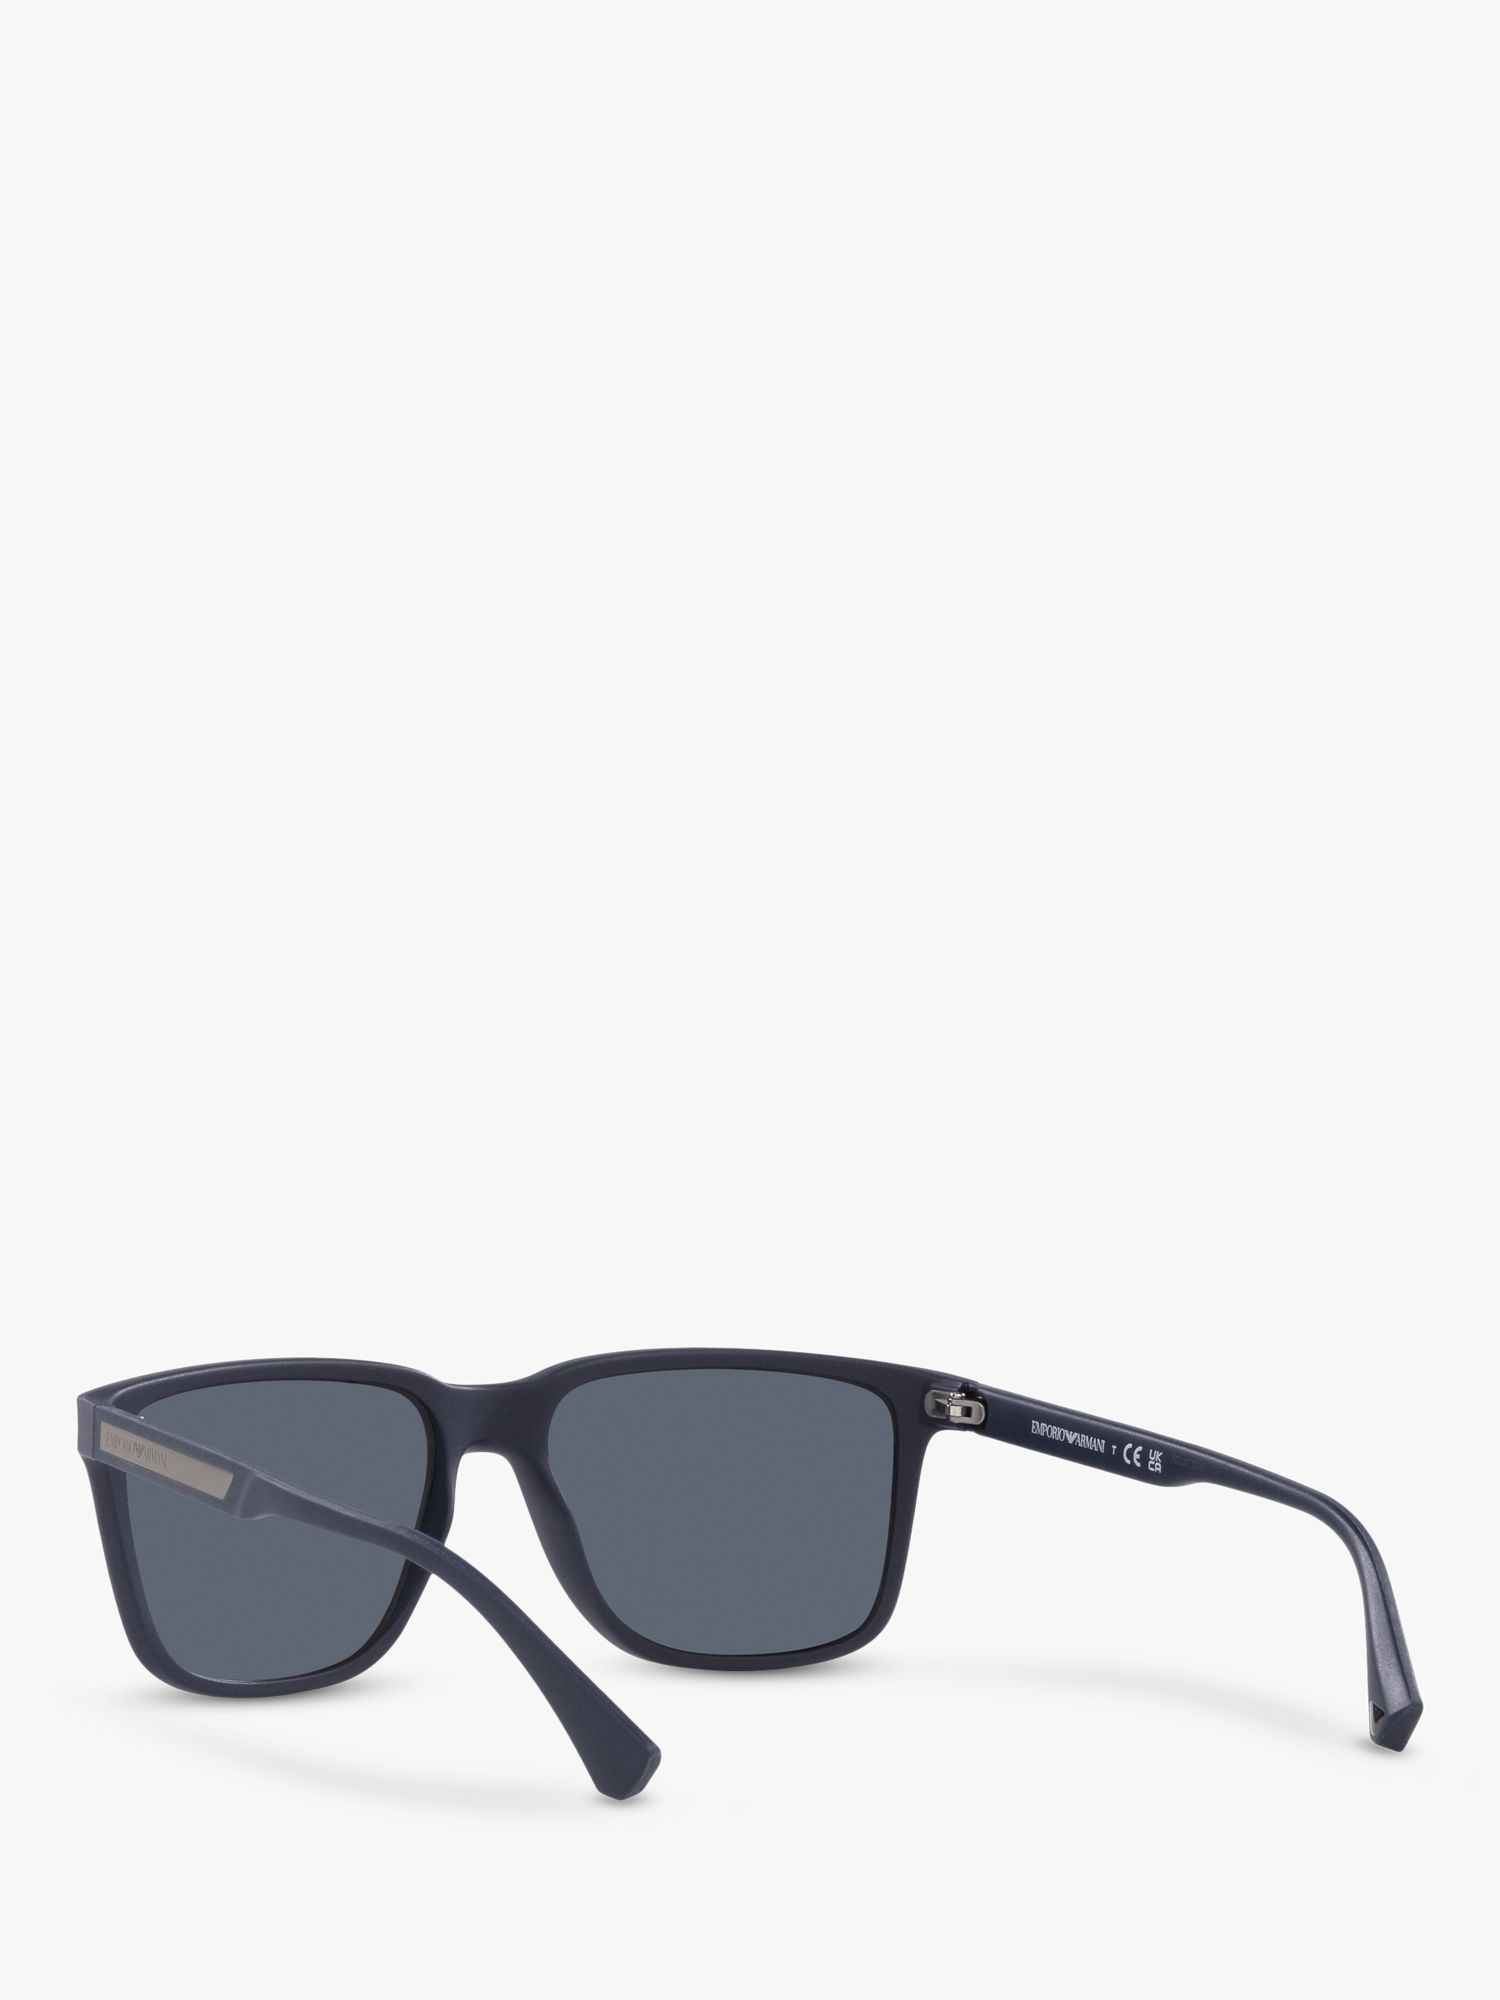 Emporio Armani EA4047 Men's Square Sunglasses, Matte Blue/Grey at John  Lewis & Partners